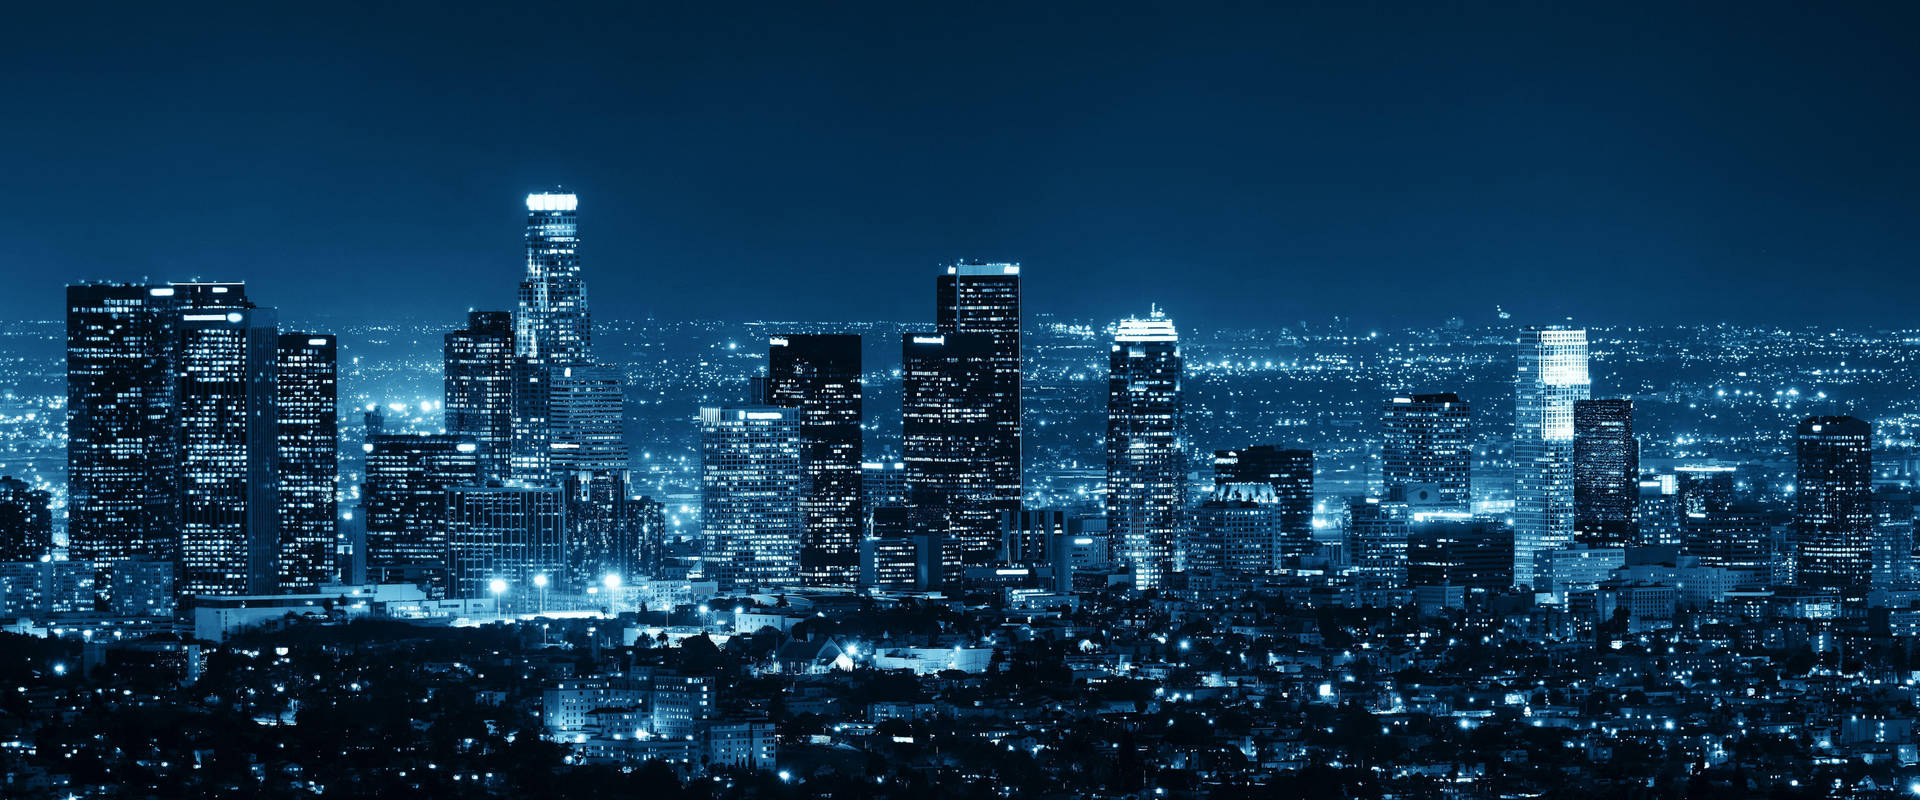 Blue-tinted Skyline Photo Of Los Angeles 4k Background